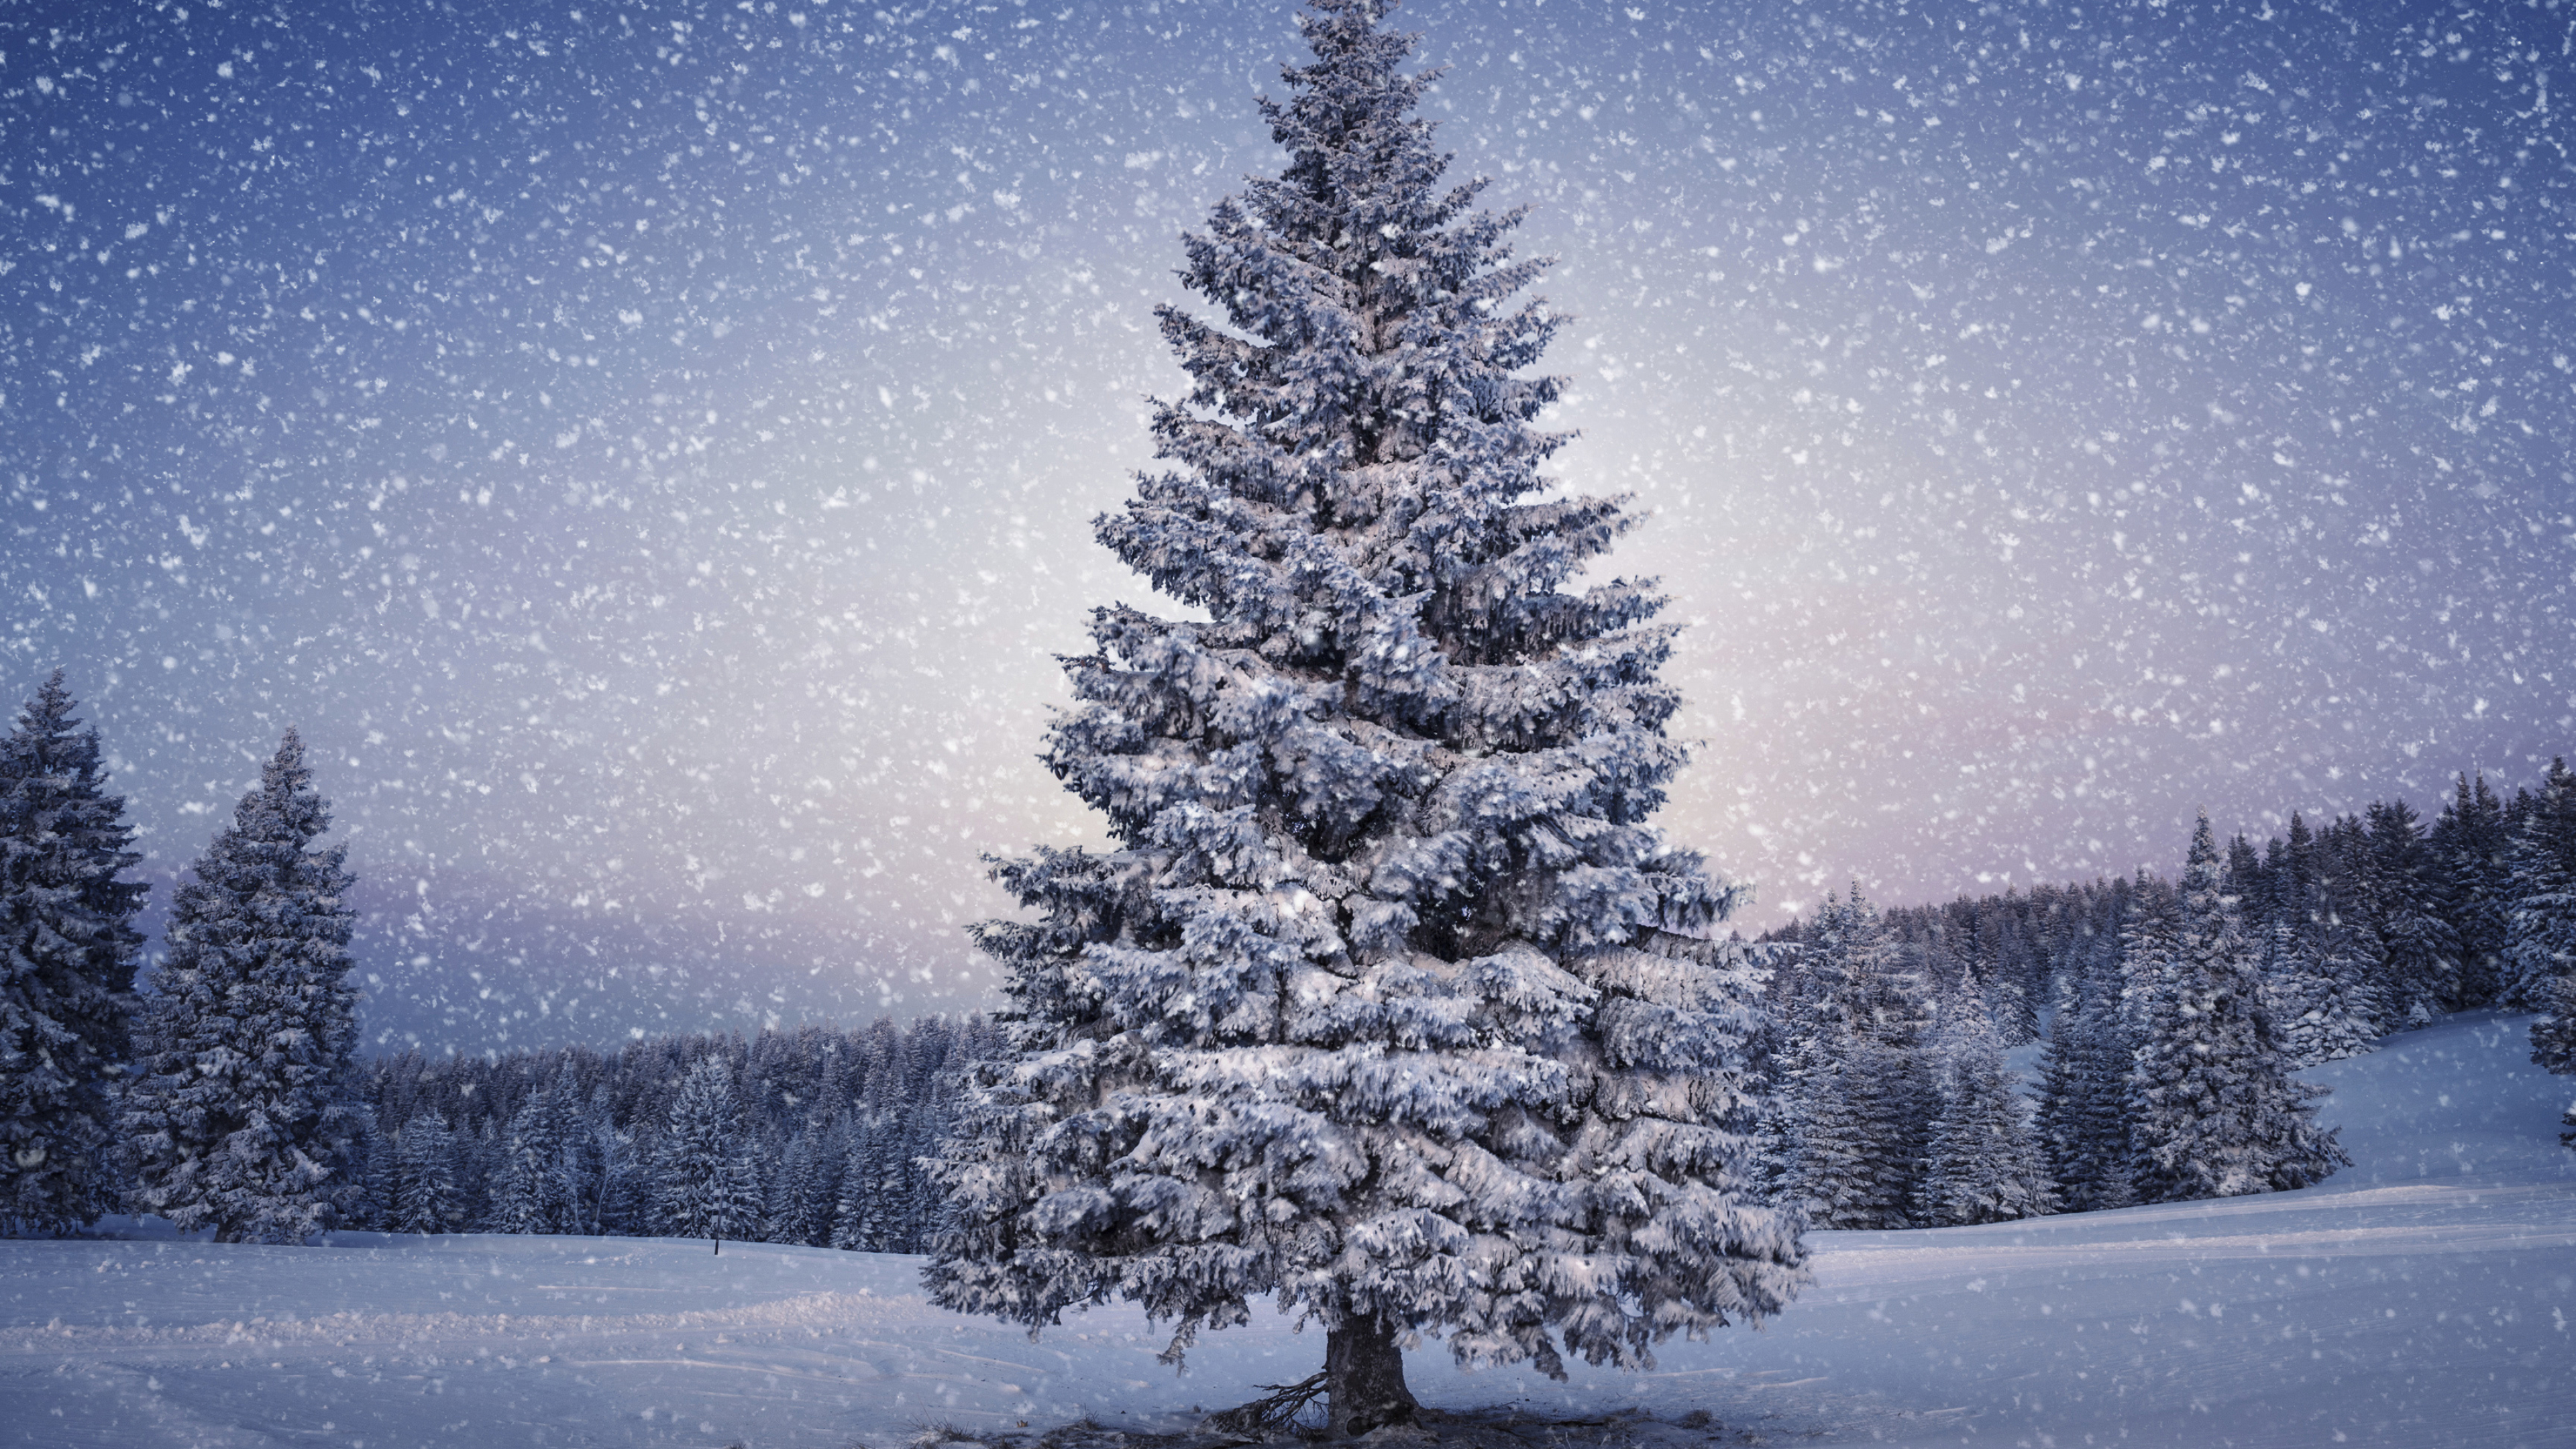 Snow-covered fir tree, Winter wonderland, Nature's beauty, Serene landscape, 3840x2160 4K Desktop